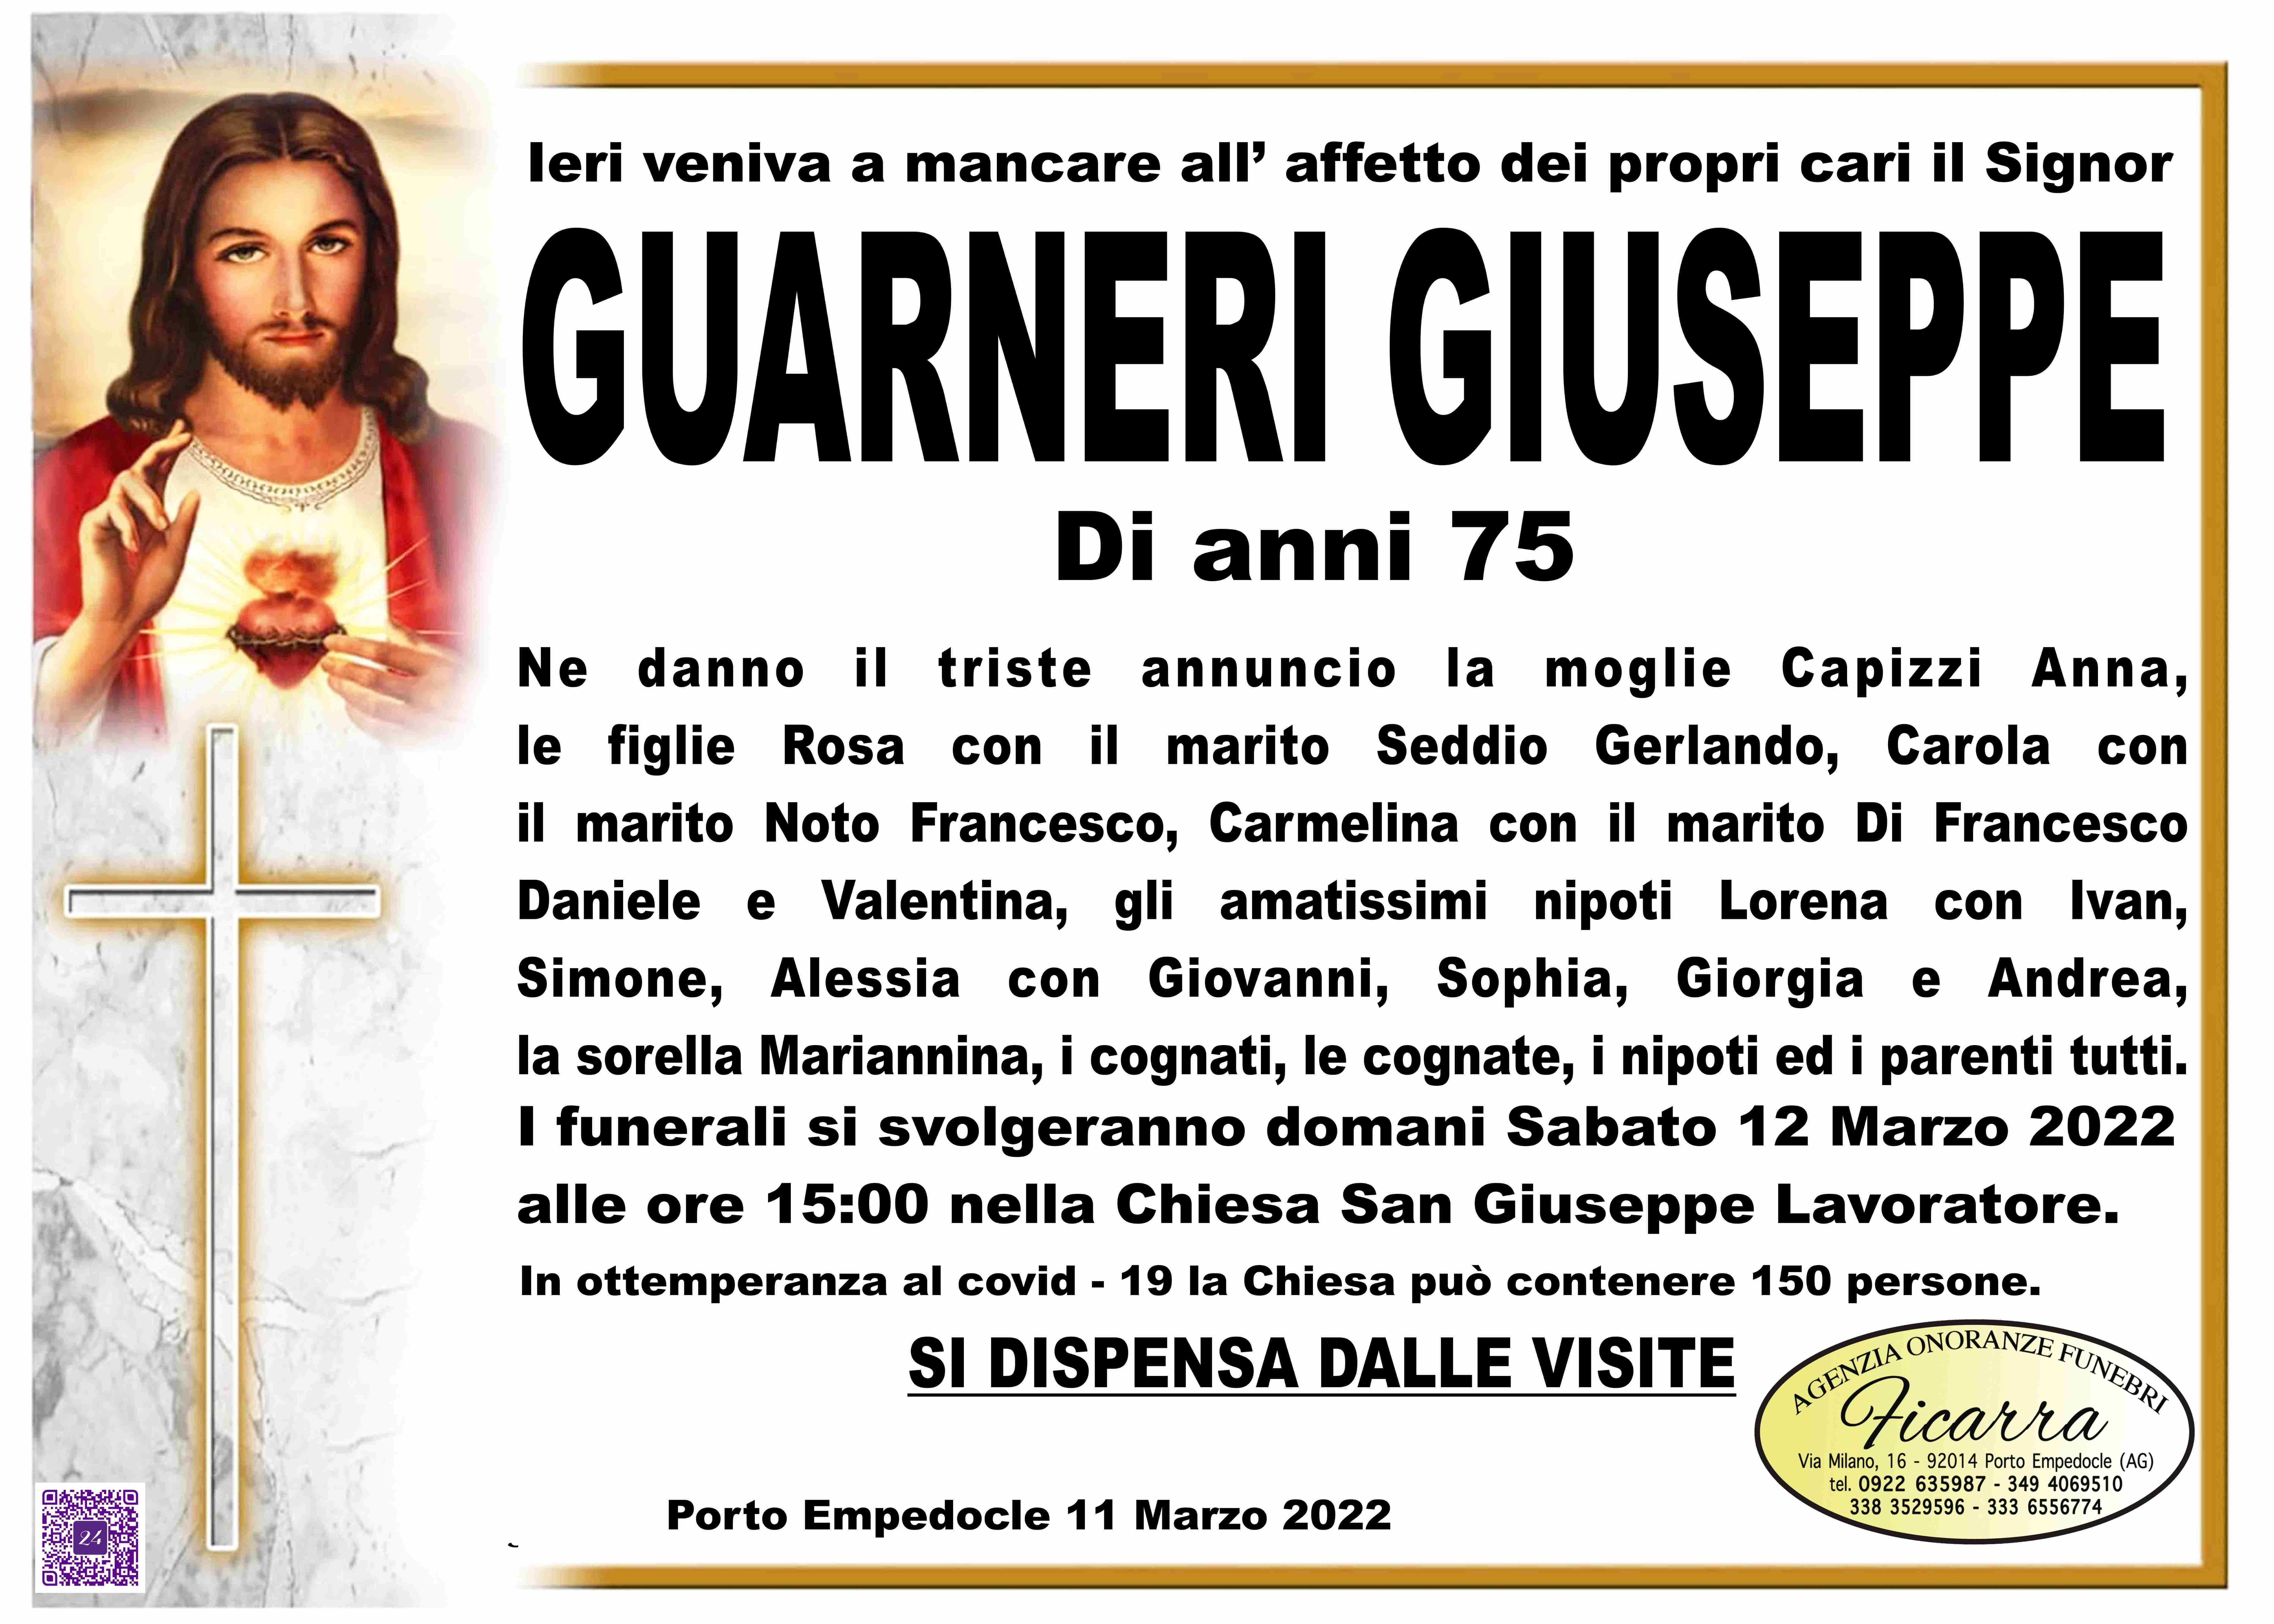 Giuseppe Guarneri